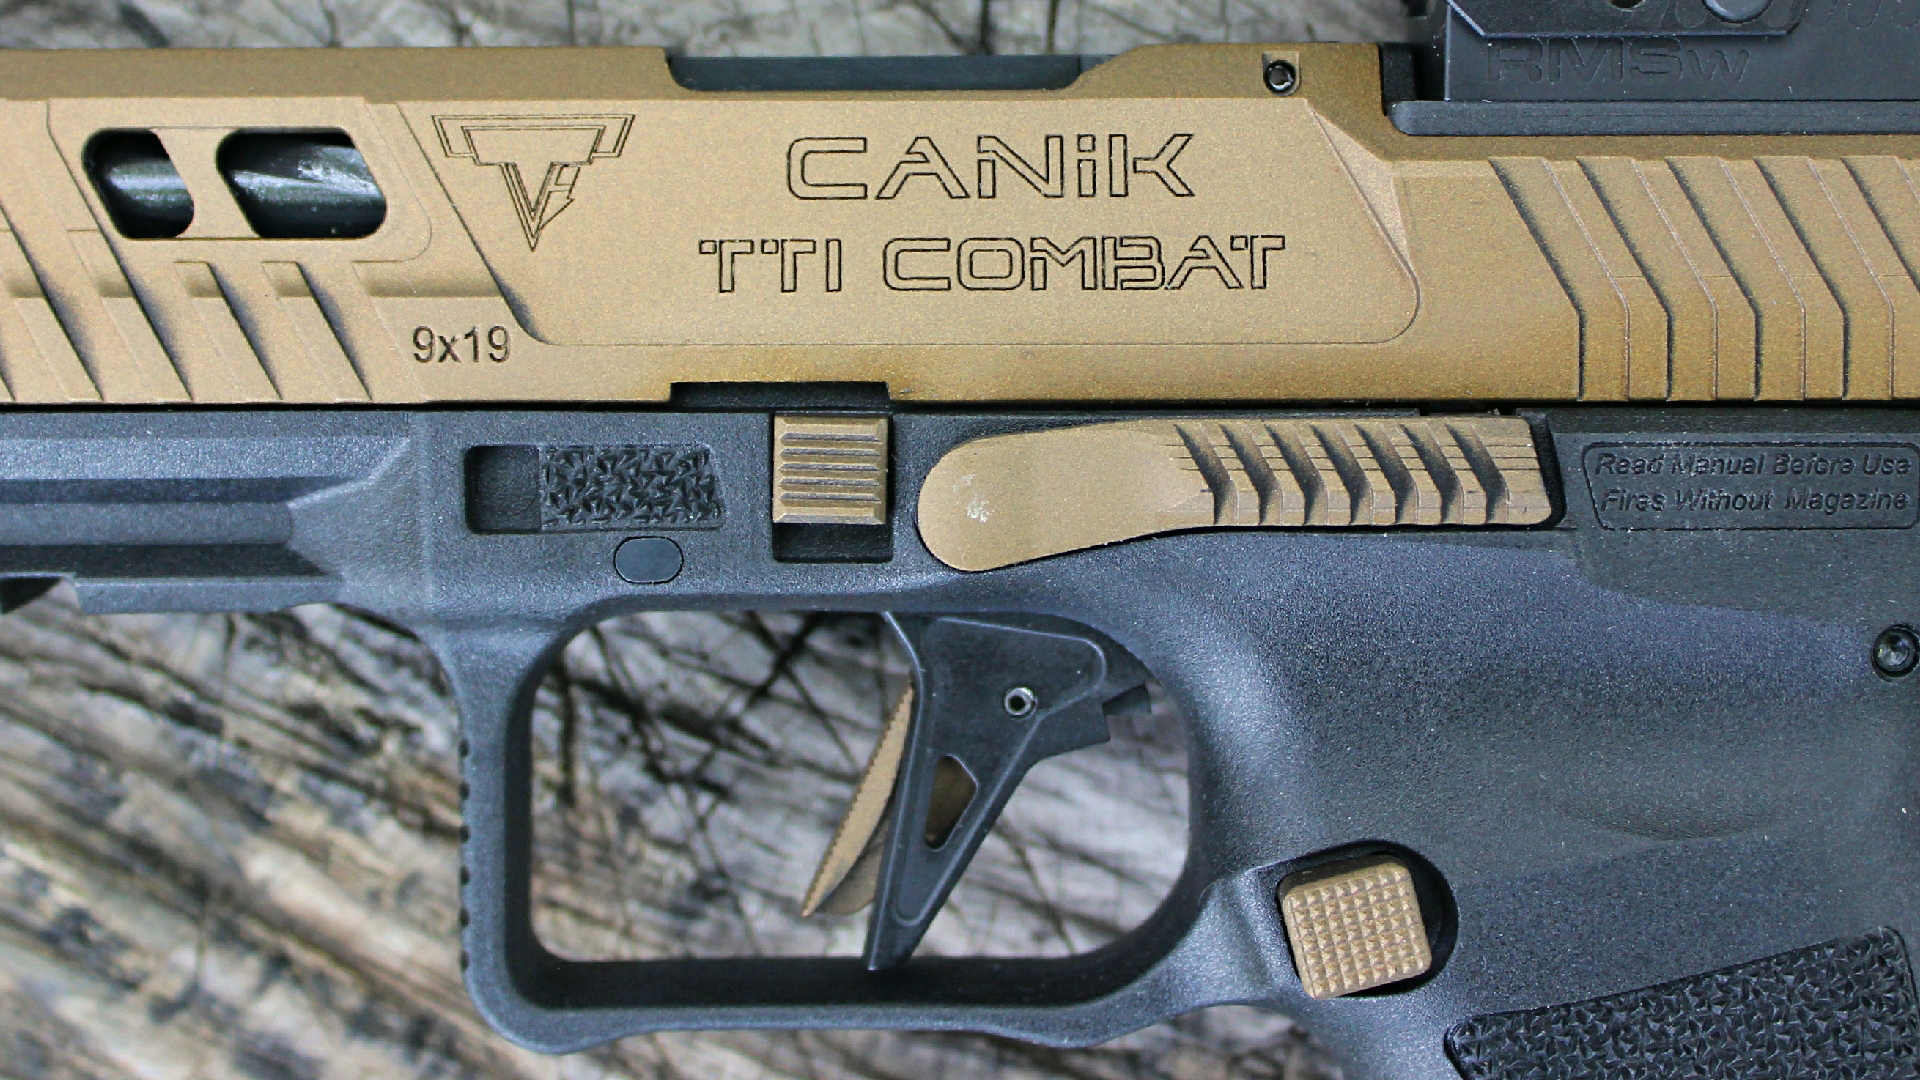 Century Arms Canik TTI Combat stamp on cerakote bronze slide gun pistol 9 mm